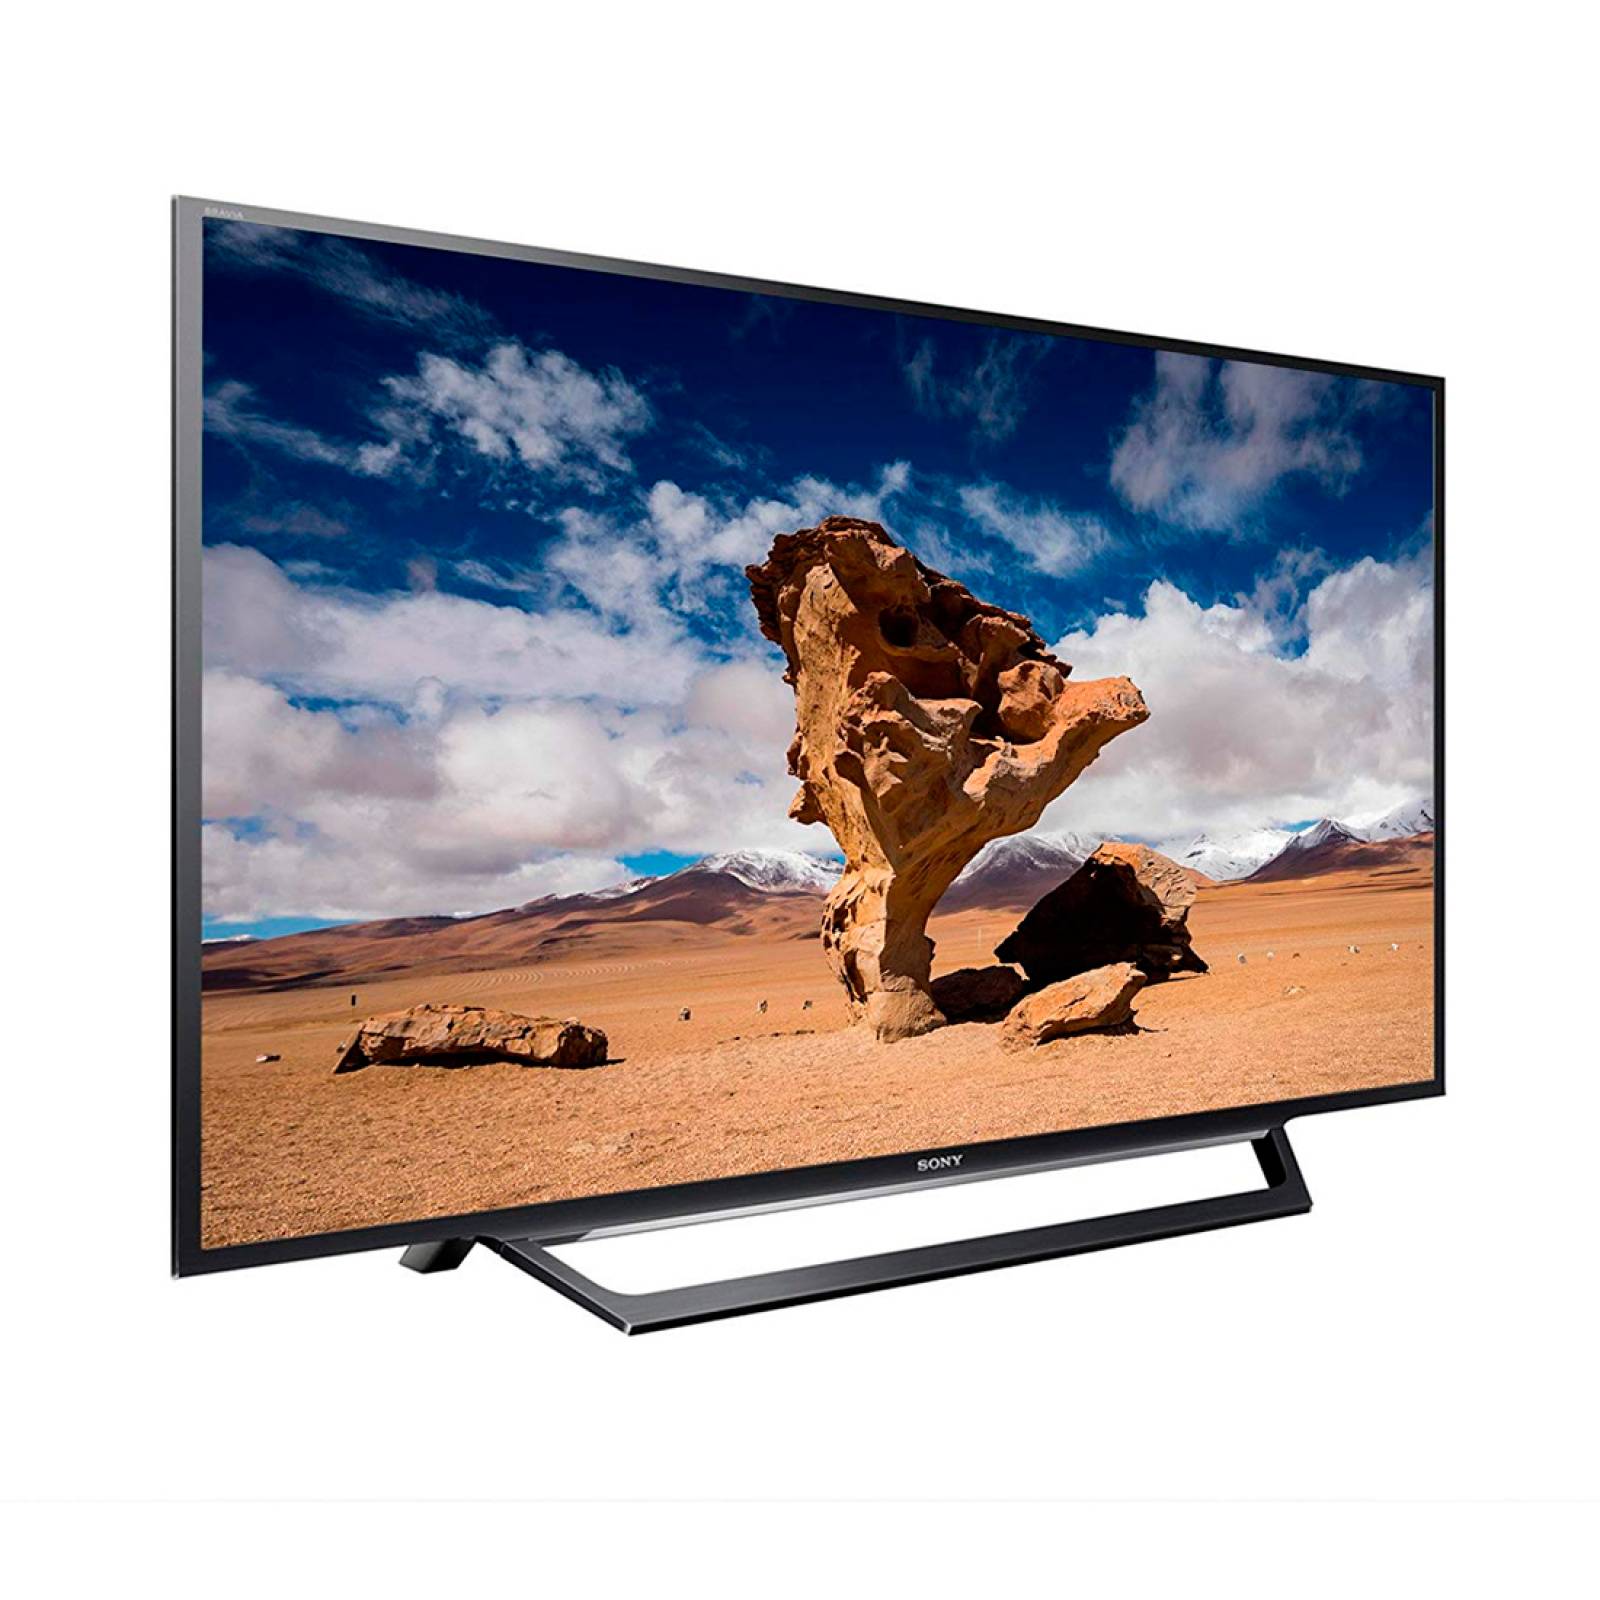 Smart TV 32 Pul LED HD 60Hz Negro Bravia KDL-32W600D Sony